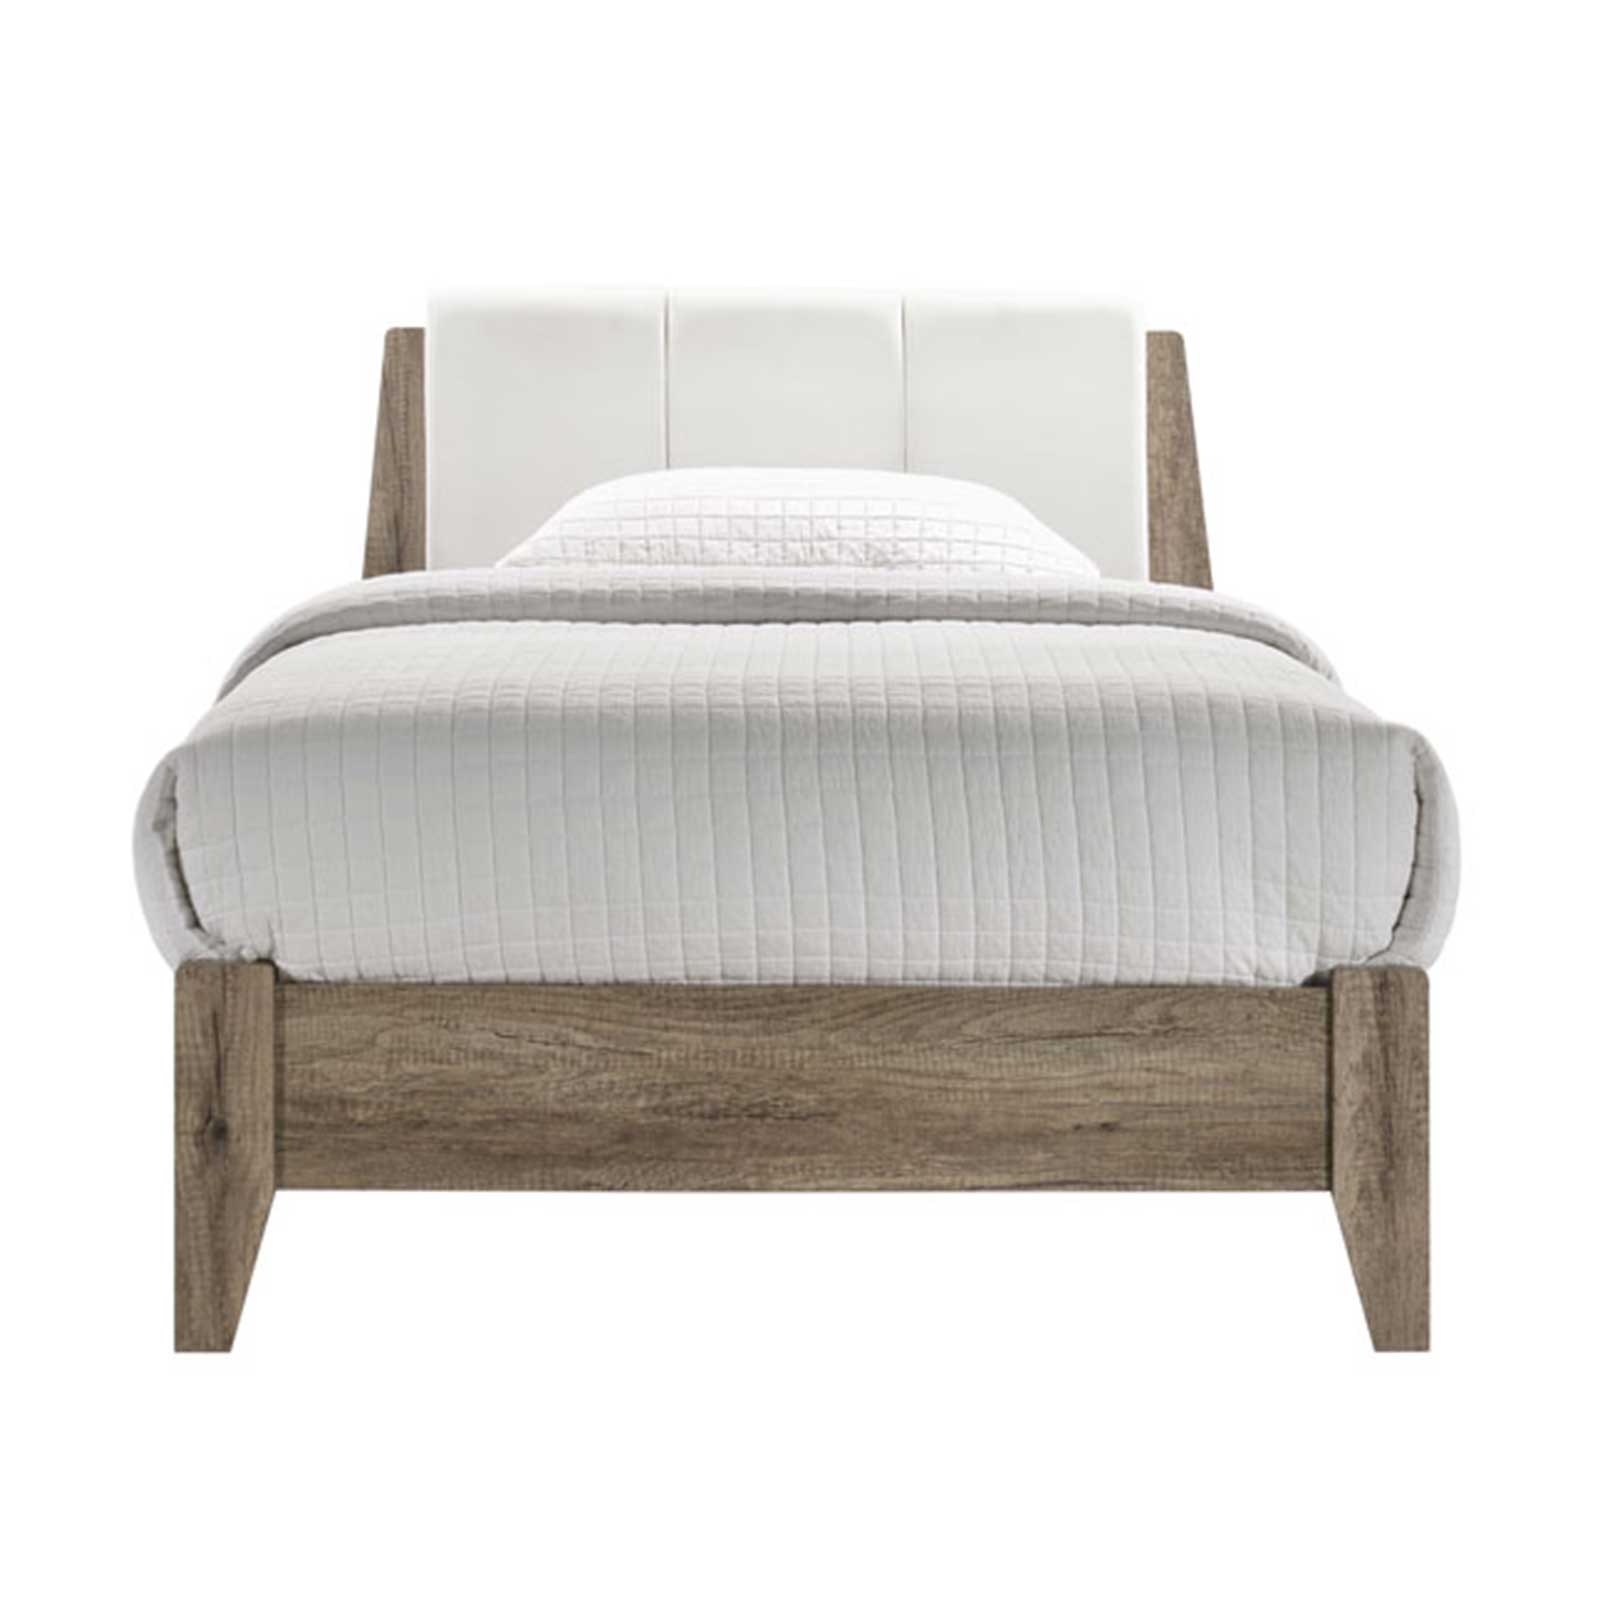 Nobu Wooden Bed Frame Australia, King Size Bed Frame And Headboard